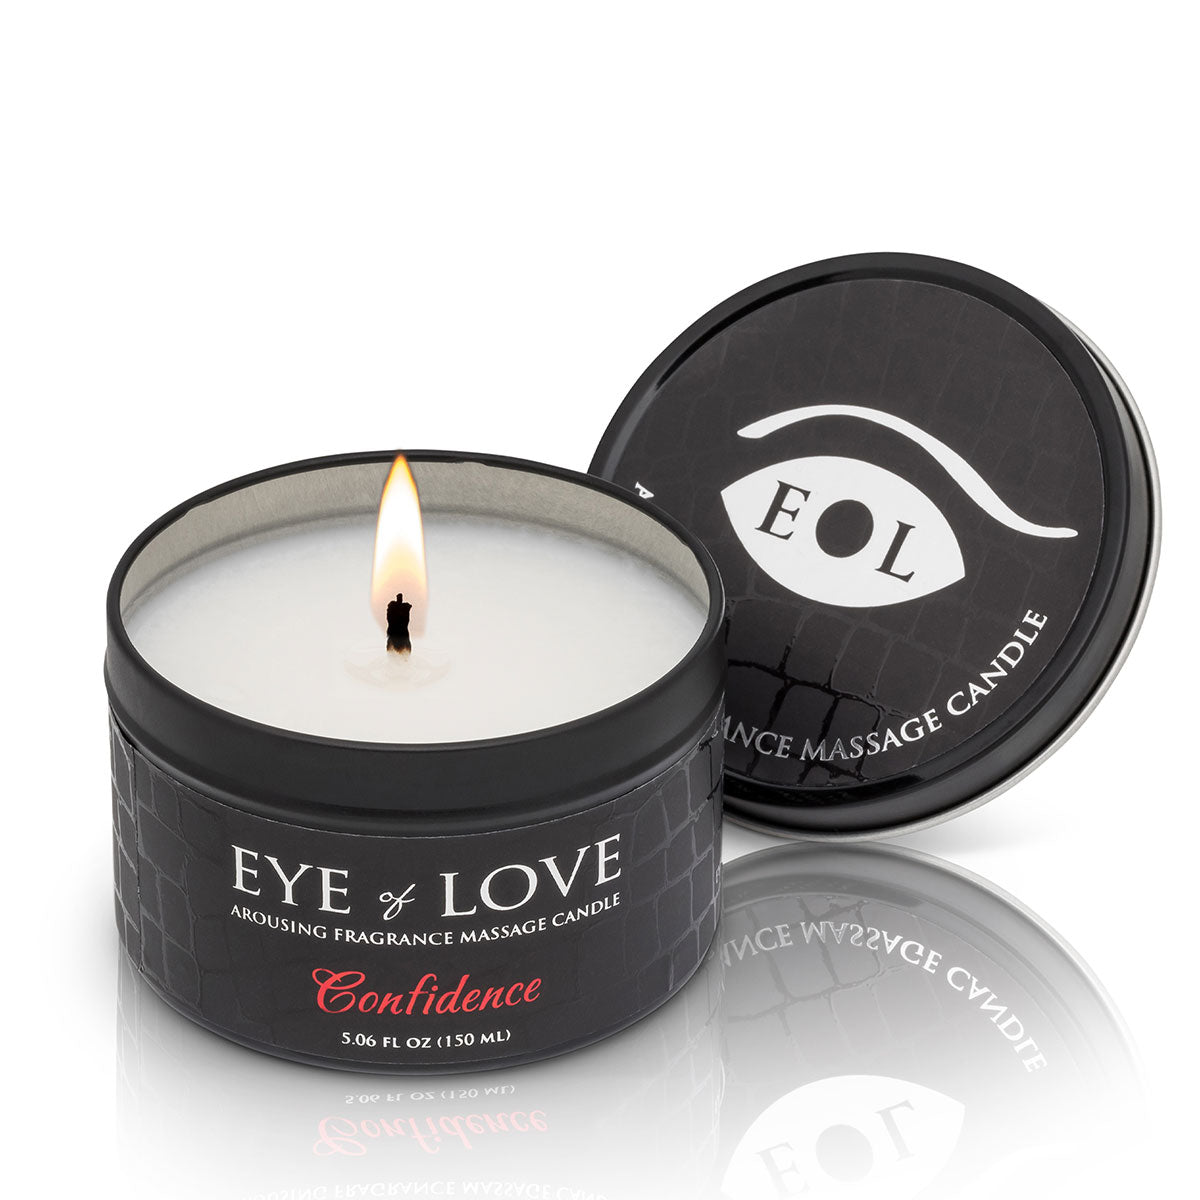 Eye of Love Pheromone Massage Candle 150ml â€“ Confident (M to F)